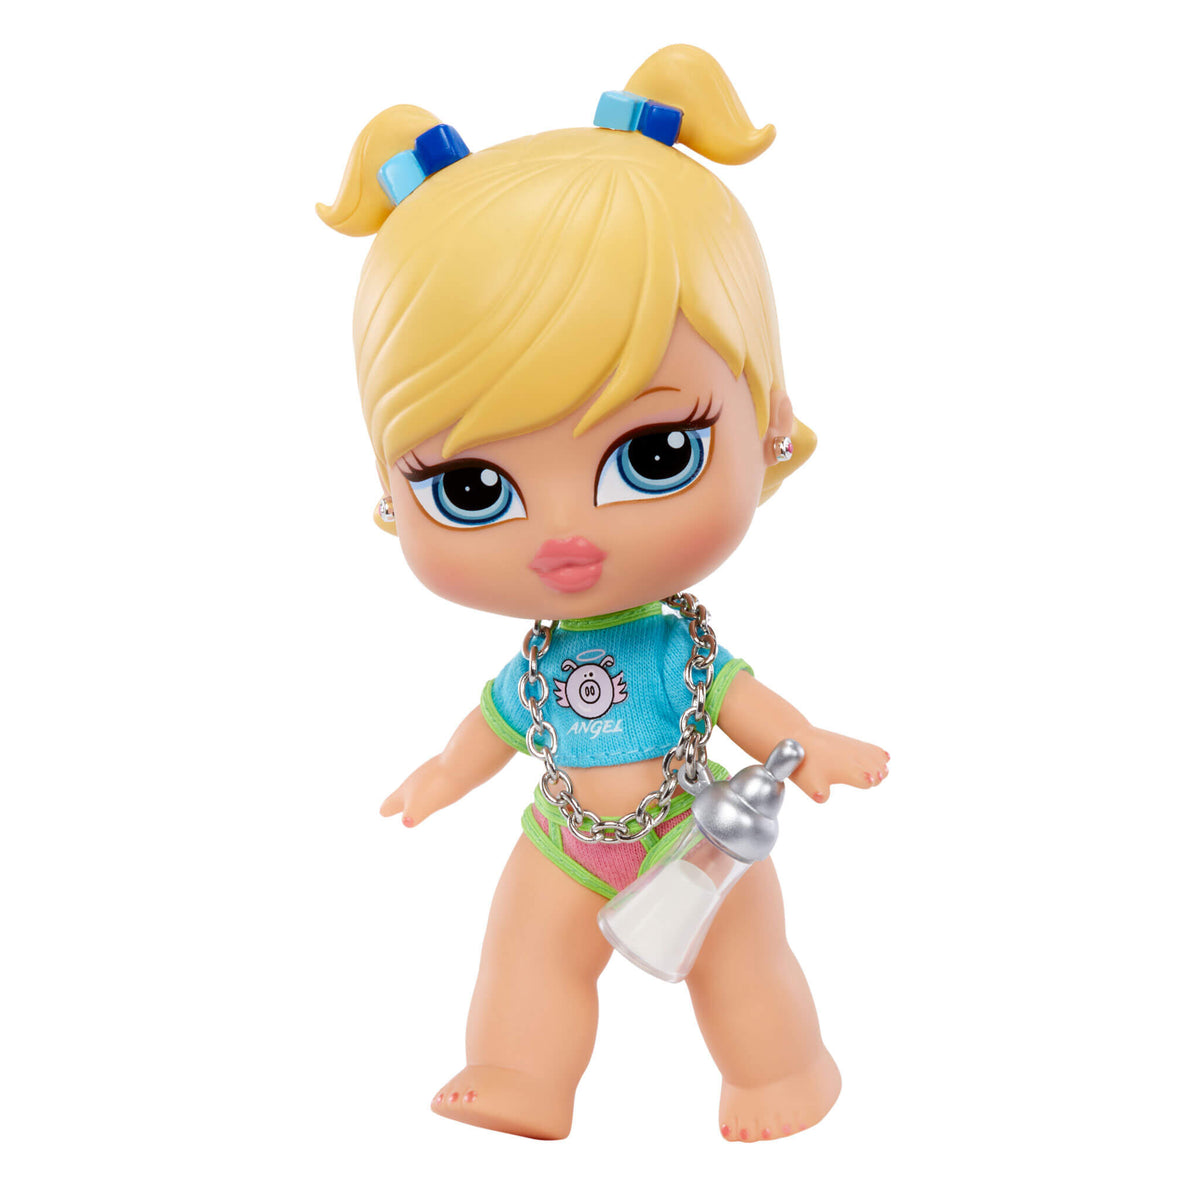 Bratz babyz doll with accessories